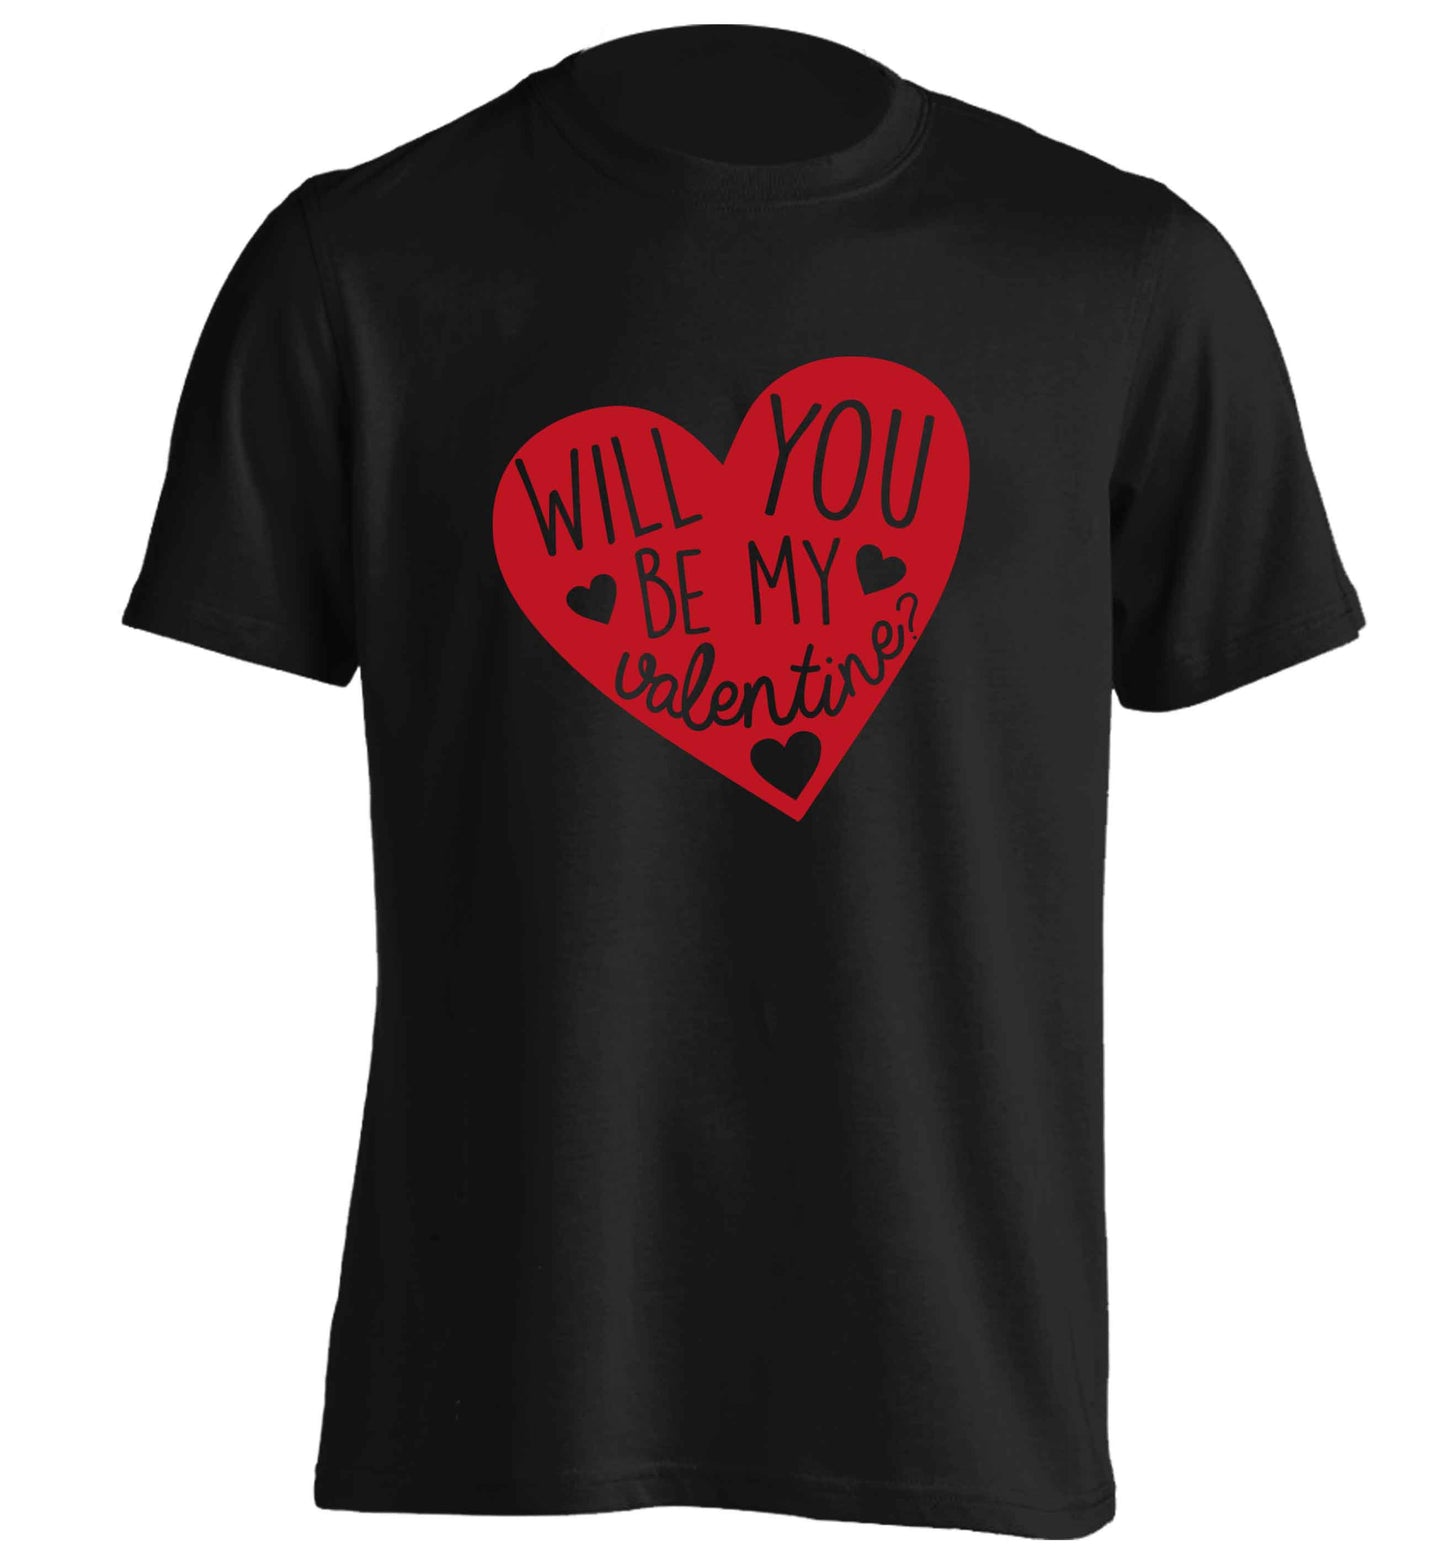 Will you be my valentine? adults unisex black Tshirt 2XL